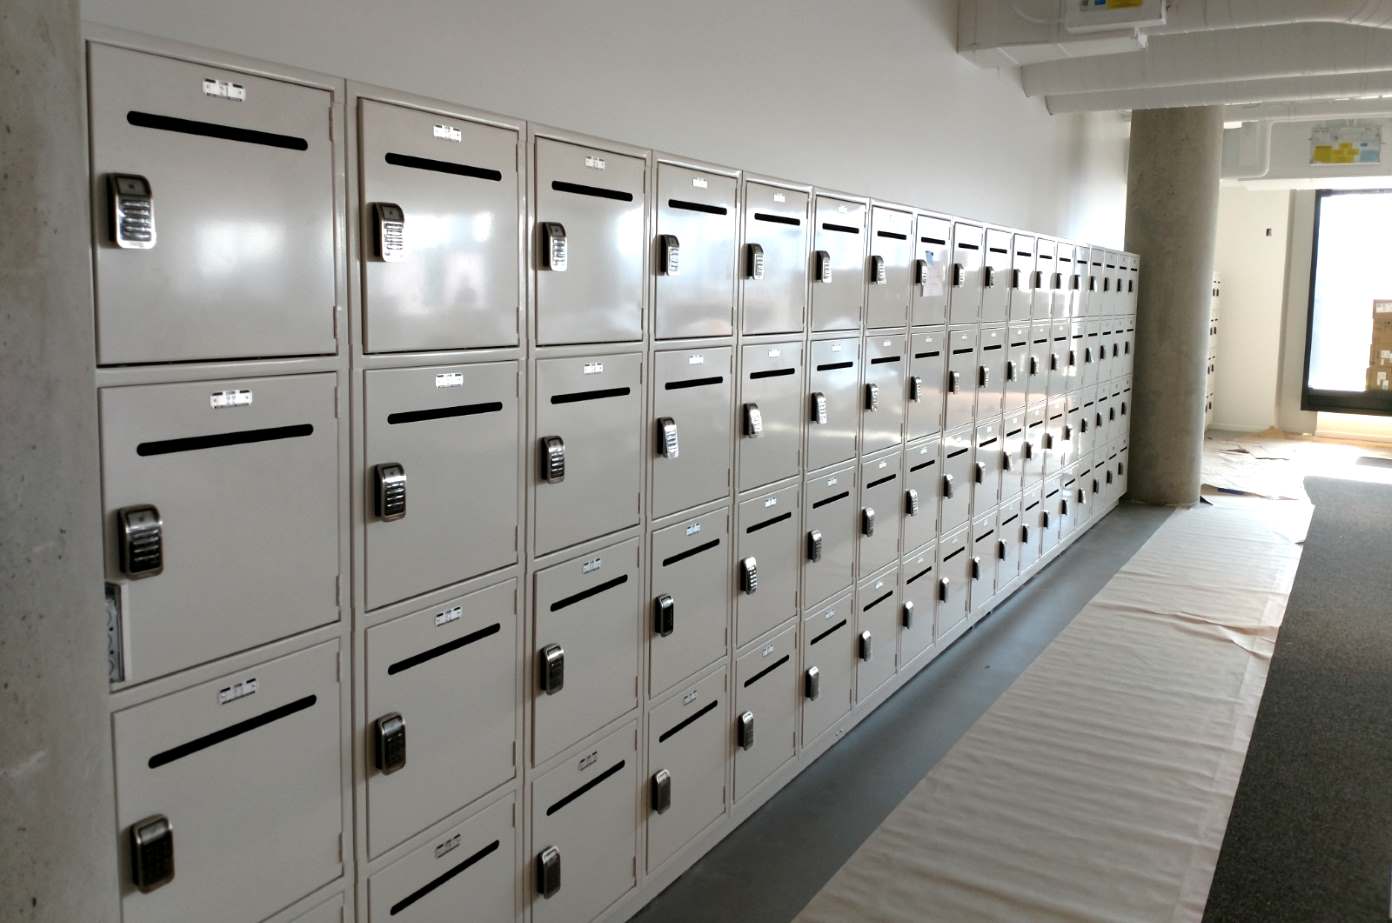 lyon-lockers-digital-locks-and-mail-slots-installed